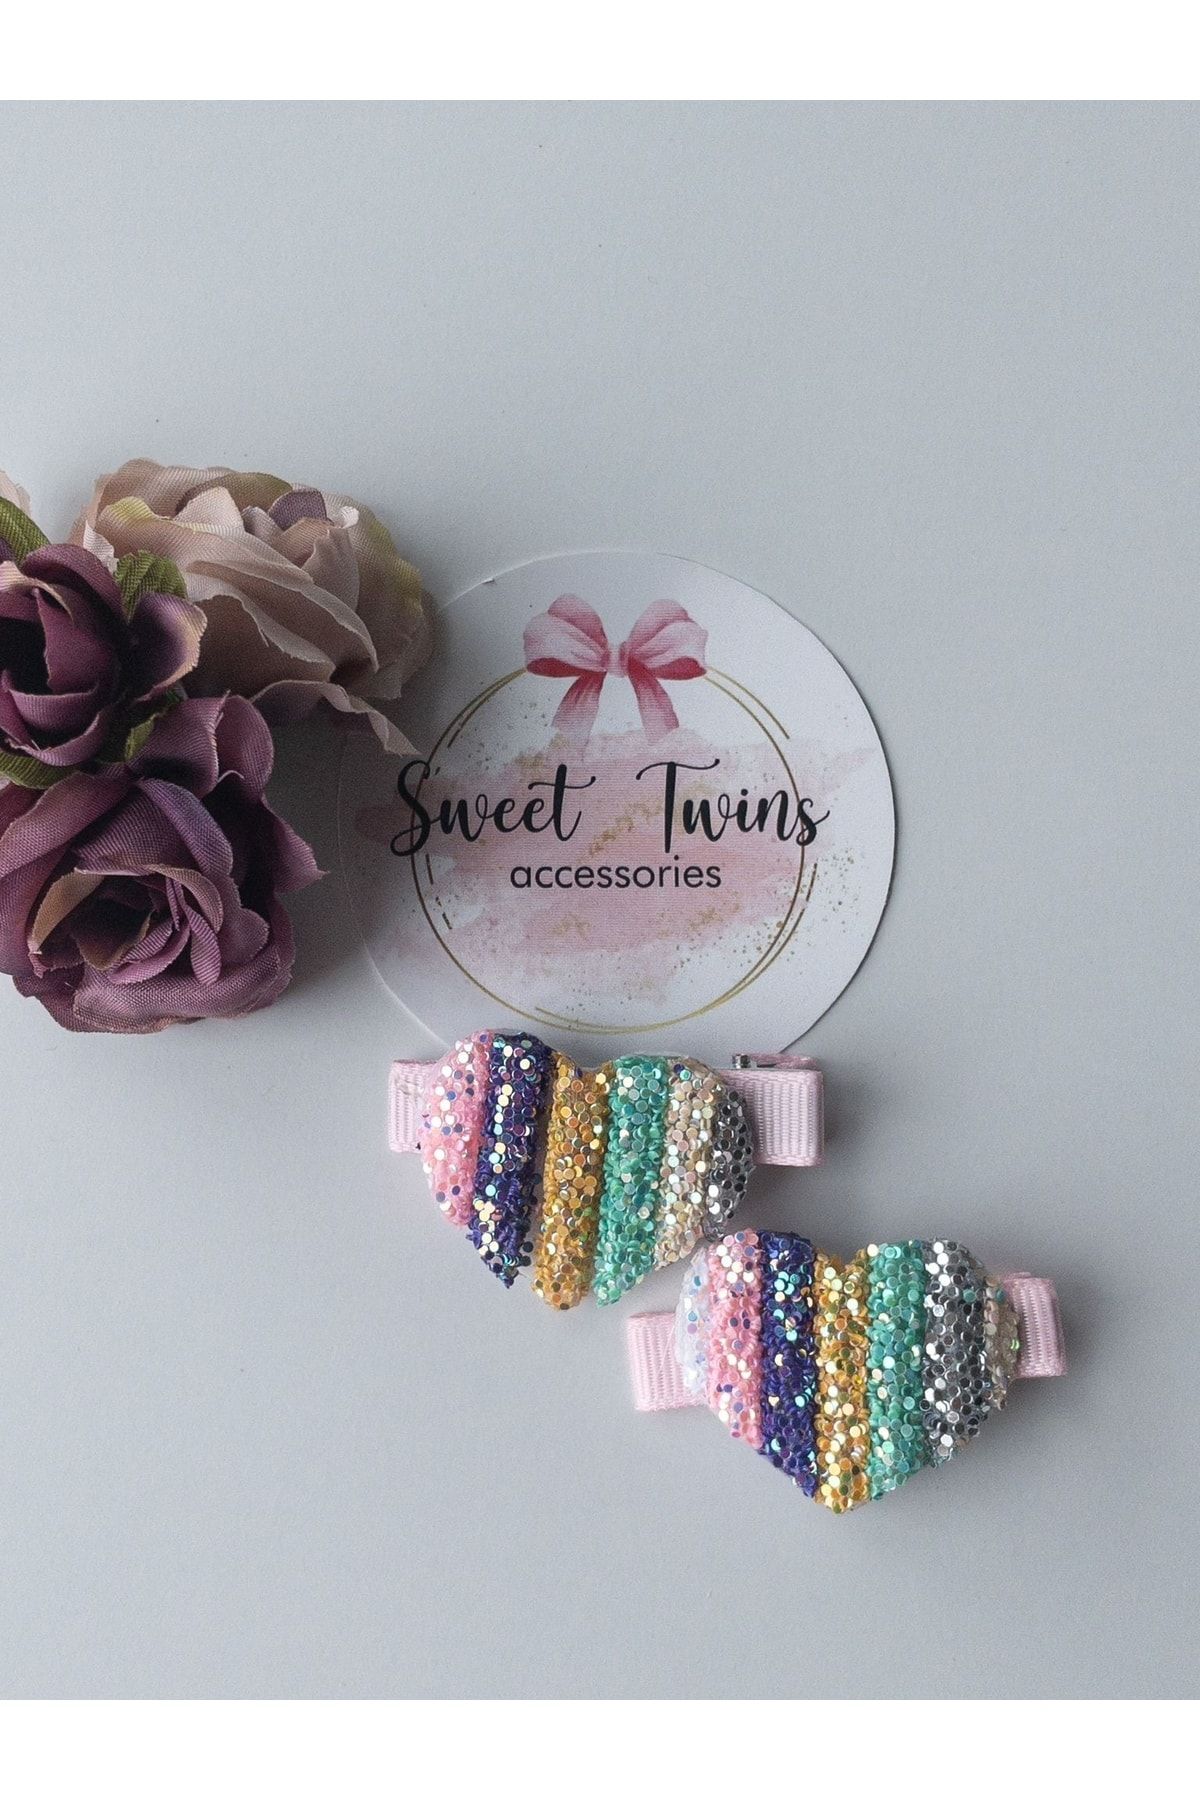 Sweet twins accessories Işıltılı Renkli Kalpli Pens Toka